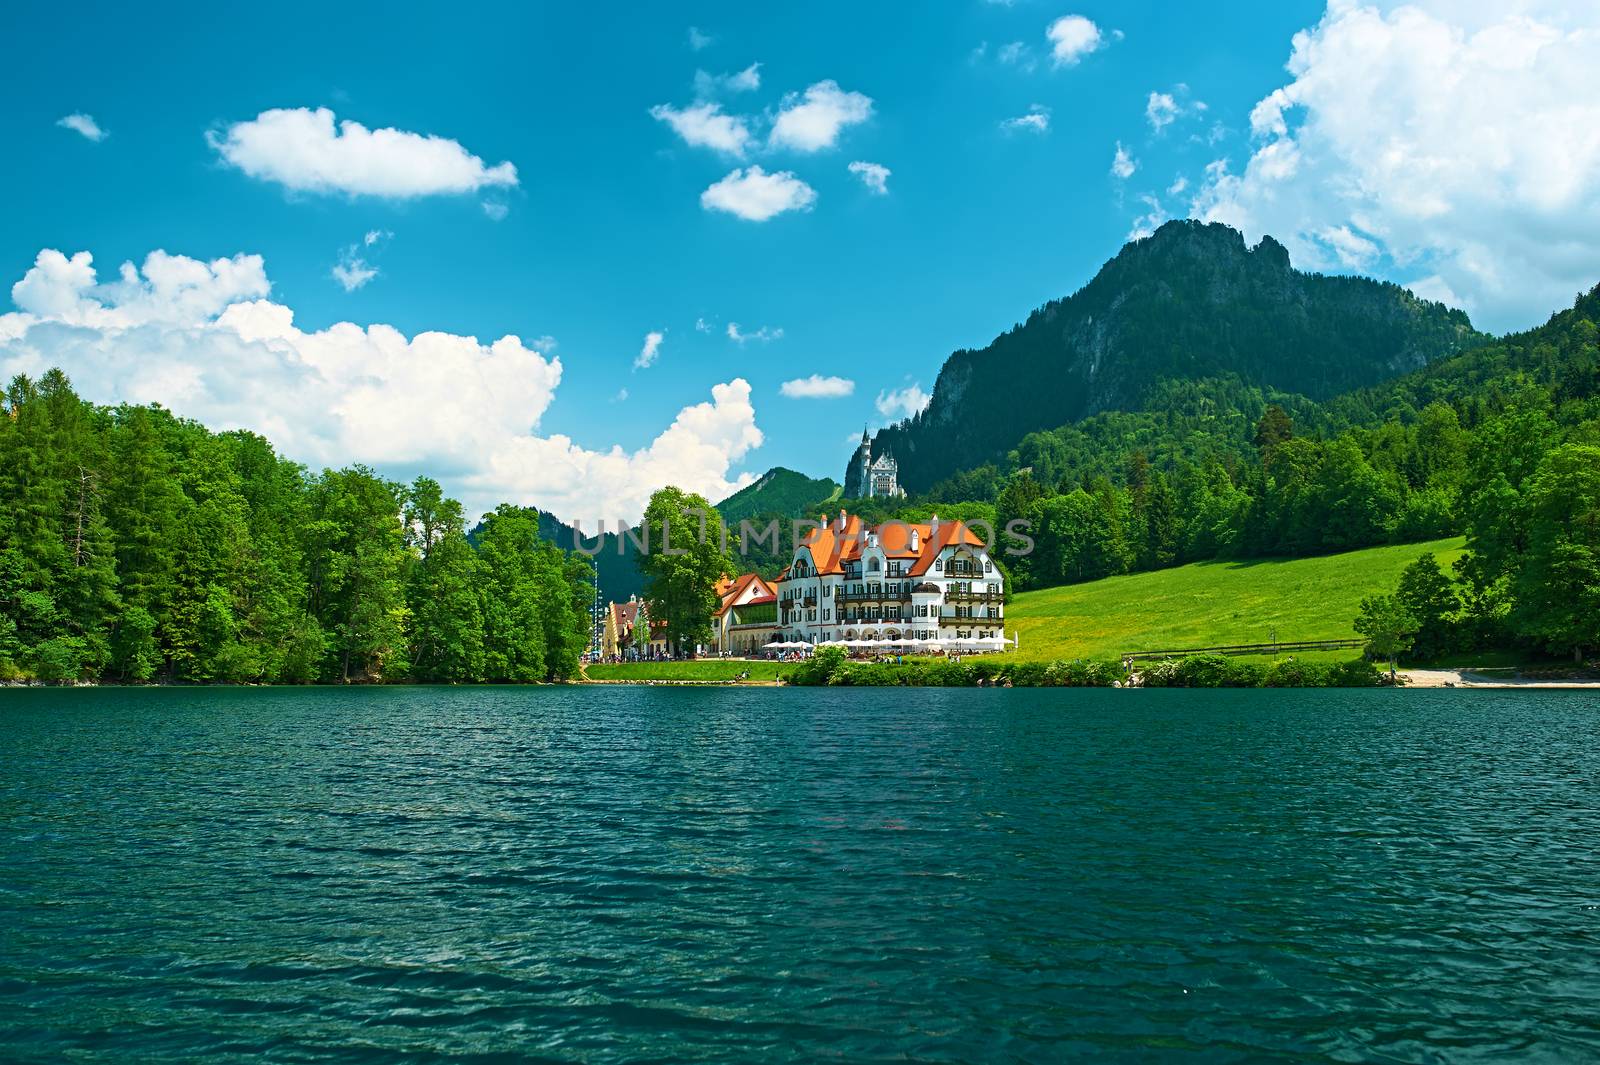 Alpsee lake at Hohenschwangau near Munich in Bavaria by haveseen